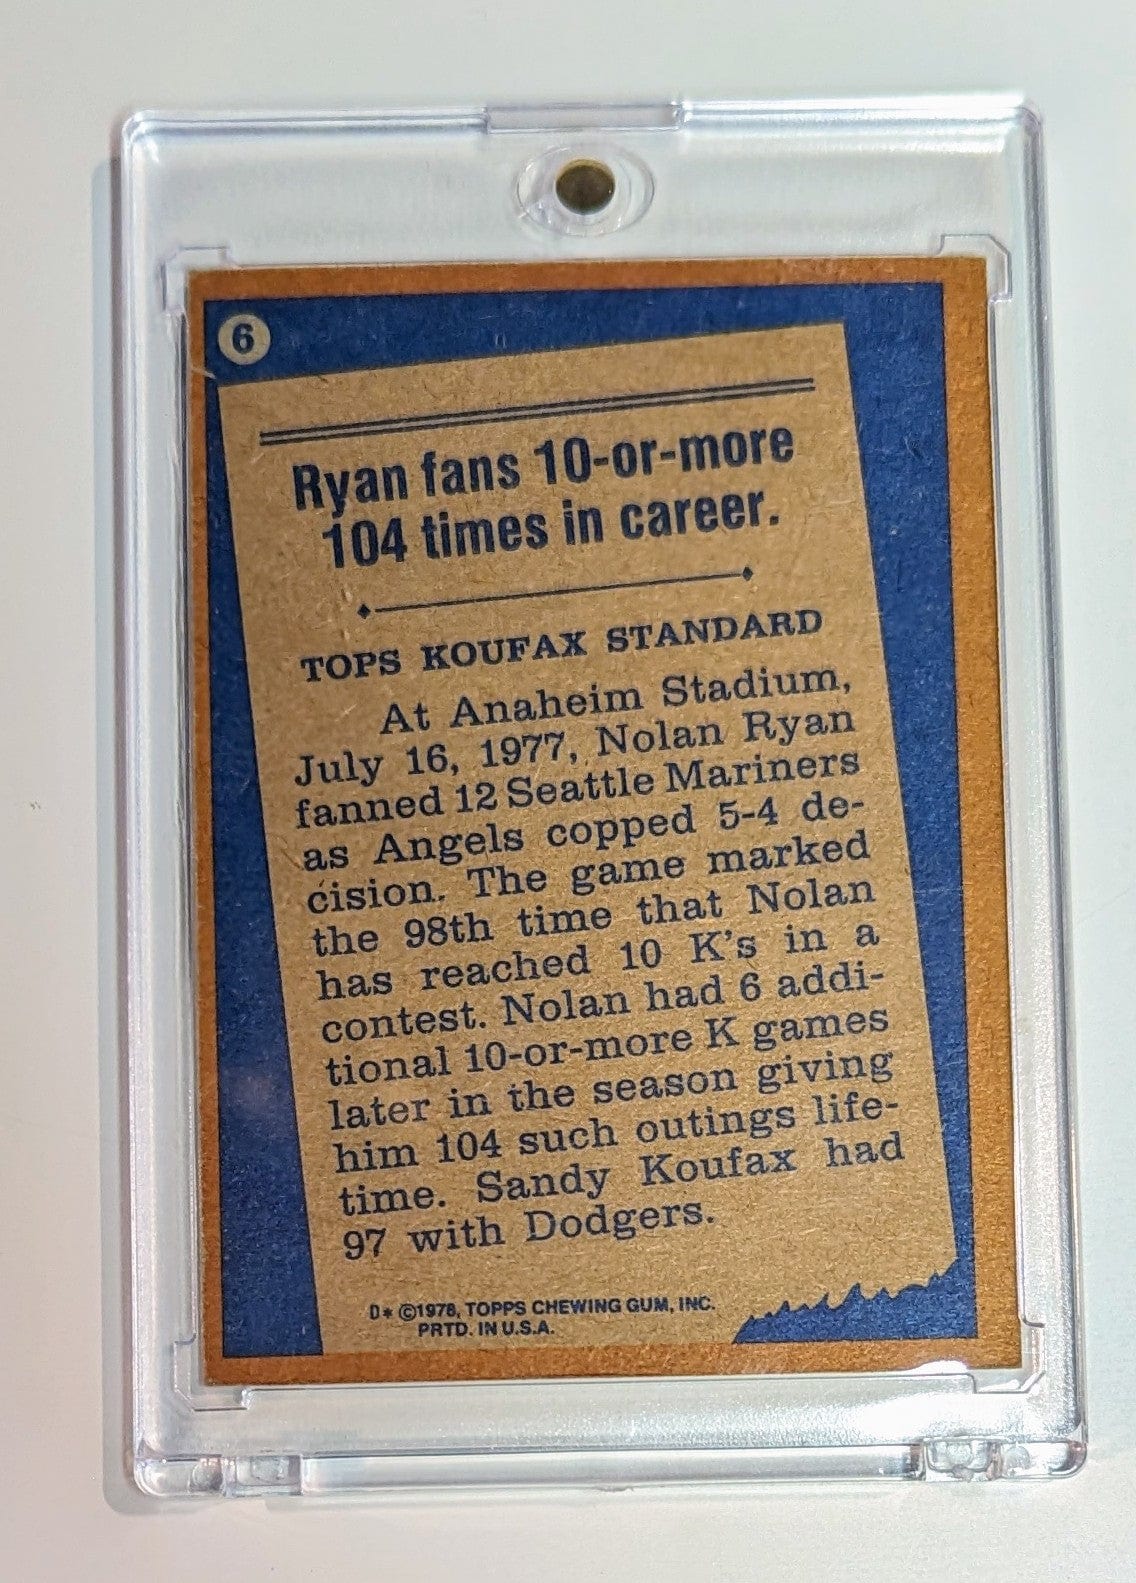 FIINR Baseball Card 1978 Topps Nolan Ryan Vintage Baseball Card #6 - Mint Condition - Tops Koufax Record